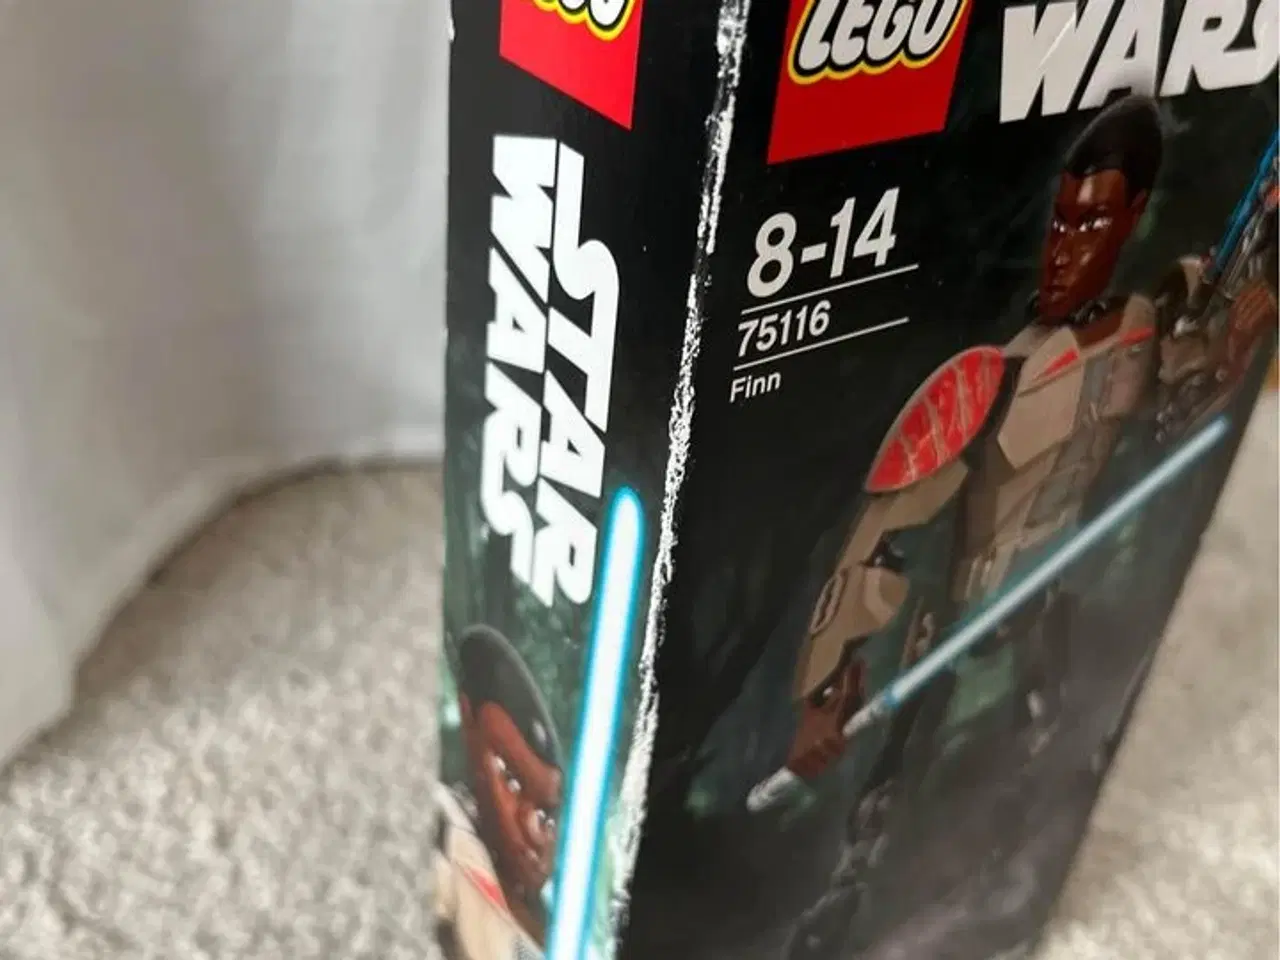 Billede 3 - Uåbnet - 75116 LEGO Star Wars Finn